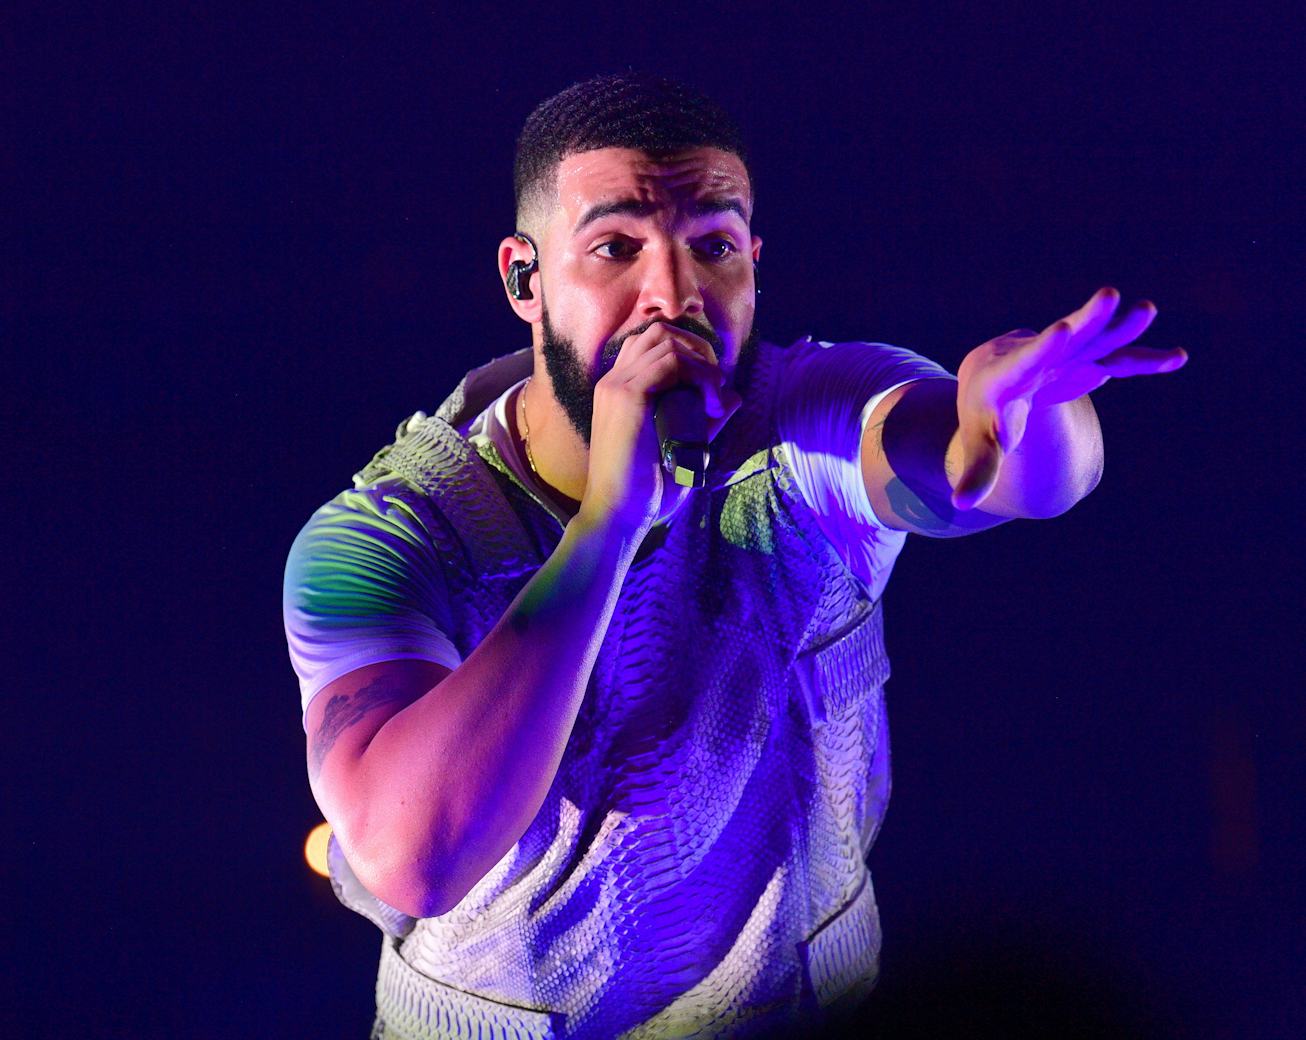 ATLANTA, GA - NOVEMBER 18: Drake performs onstage during the Final Stop of 'Aubrey & The three Amigo...